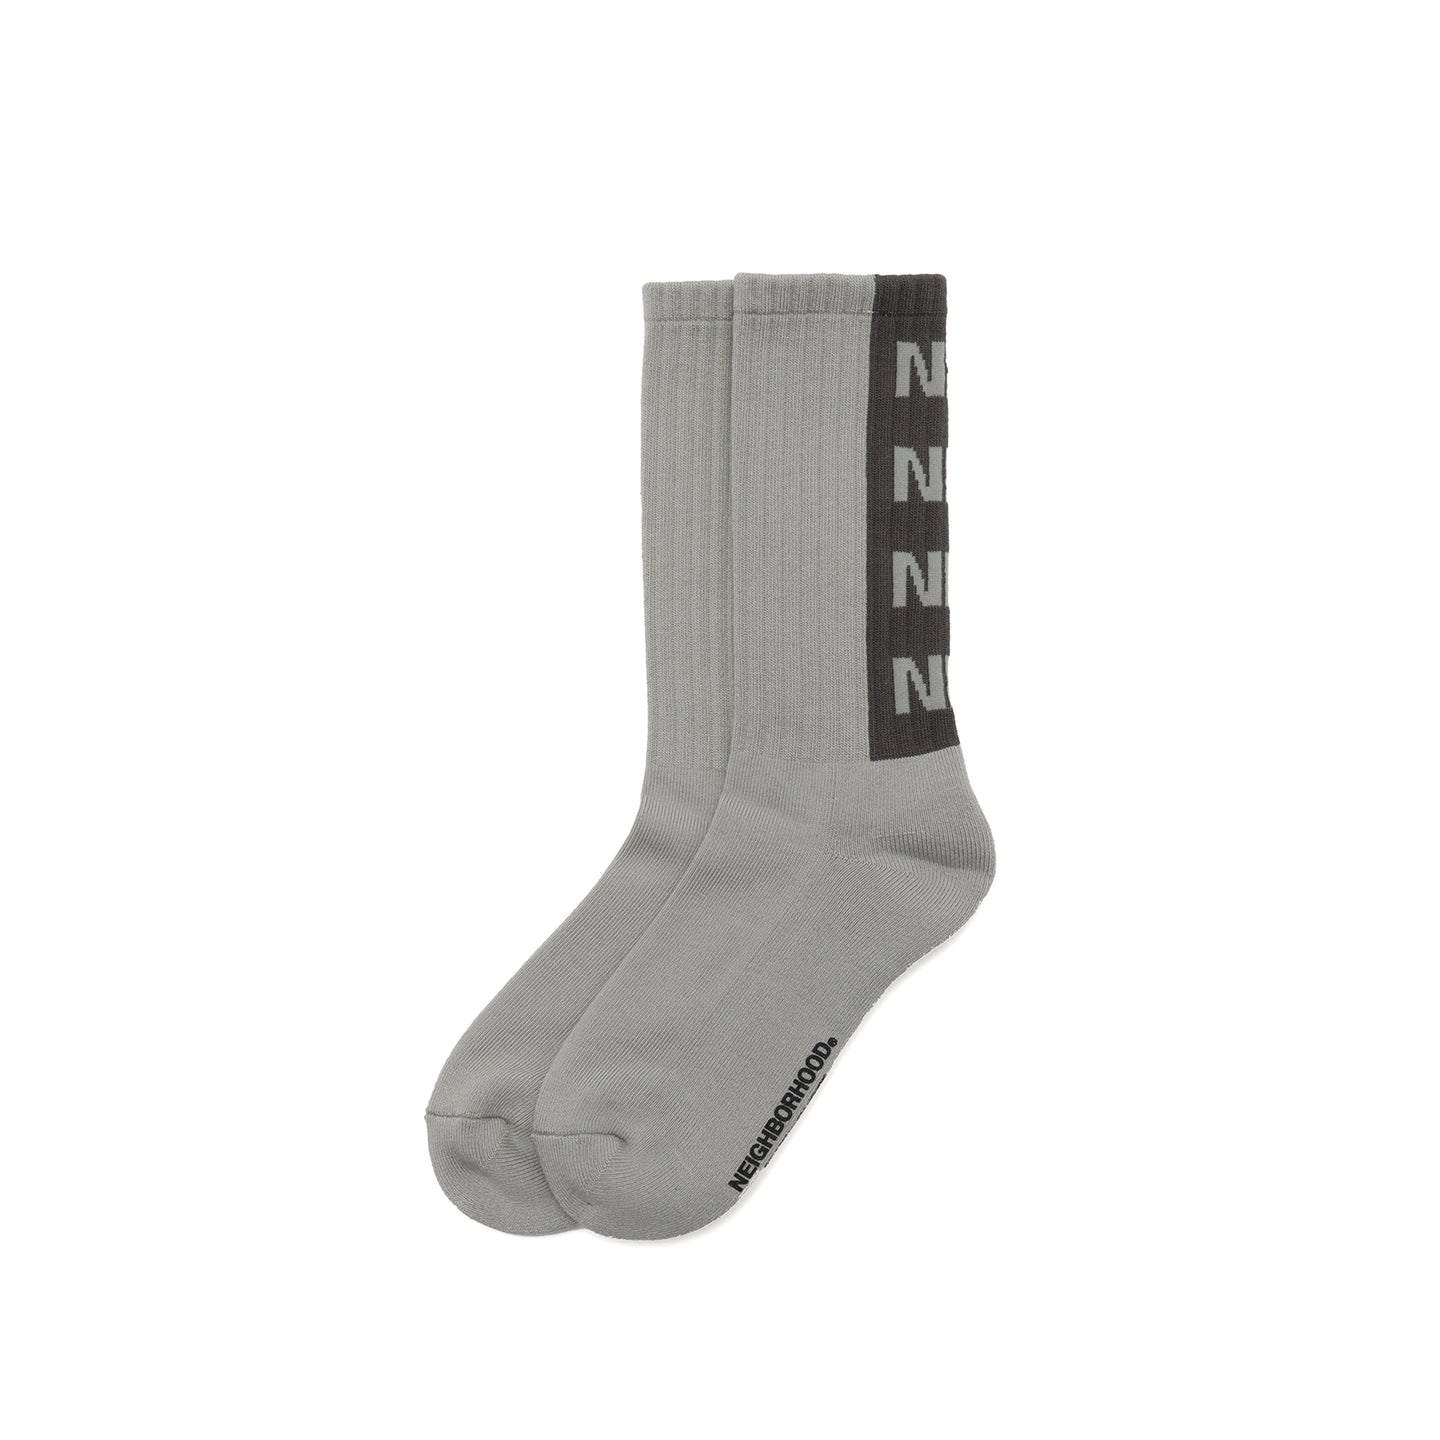 Neighborhood NH Logo Socks Gray